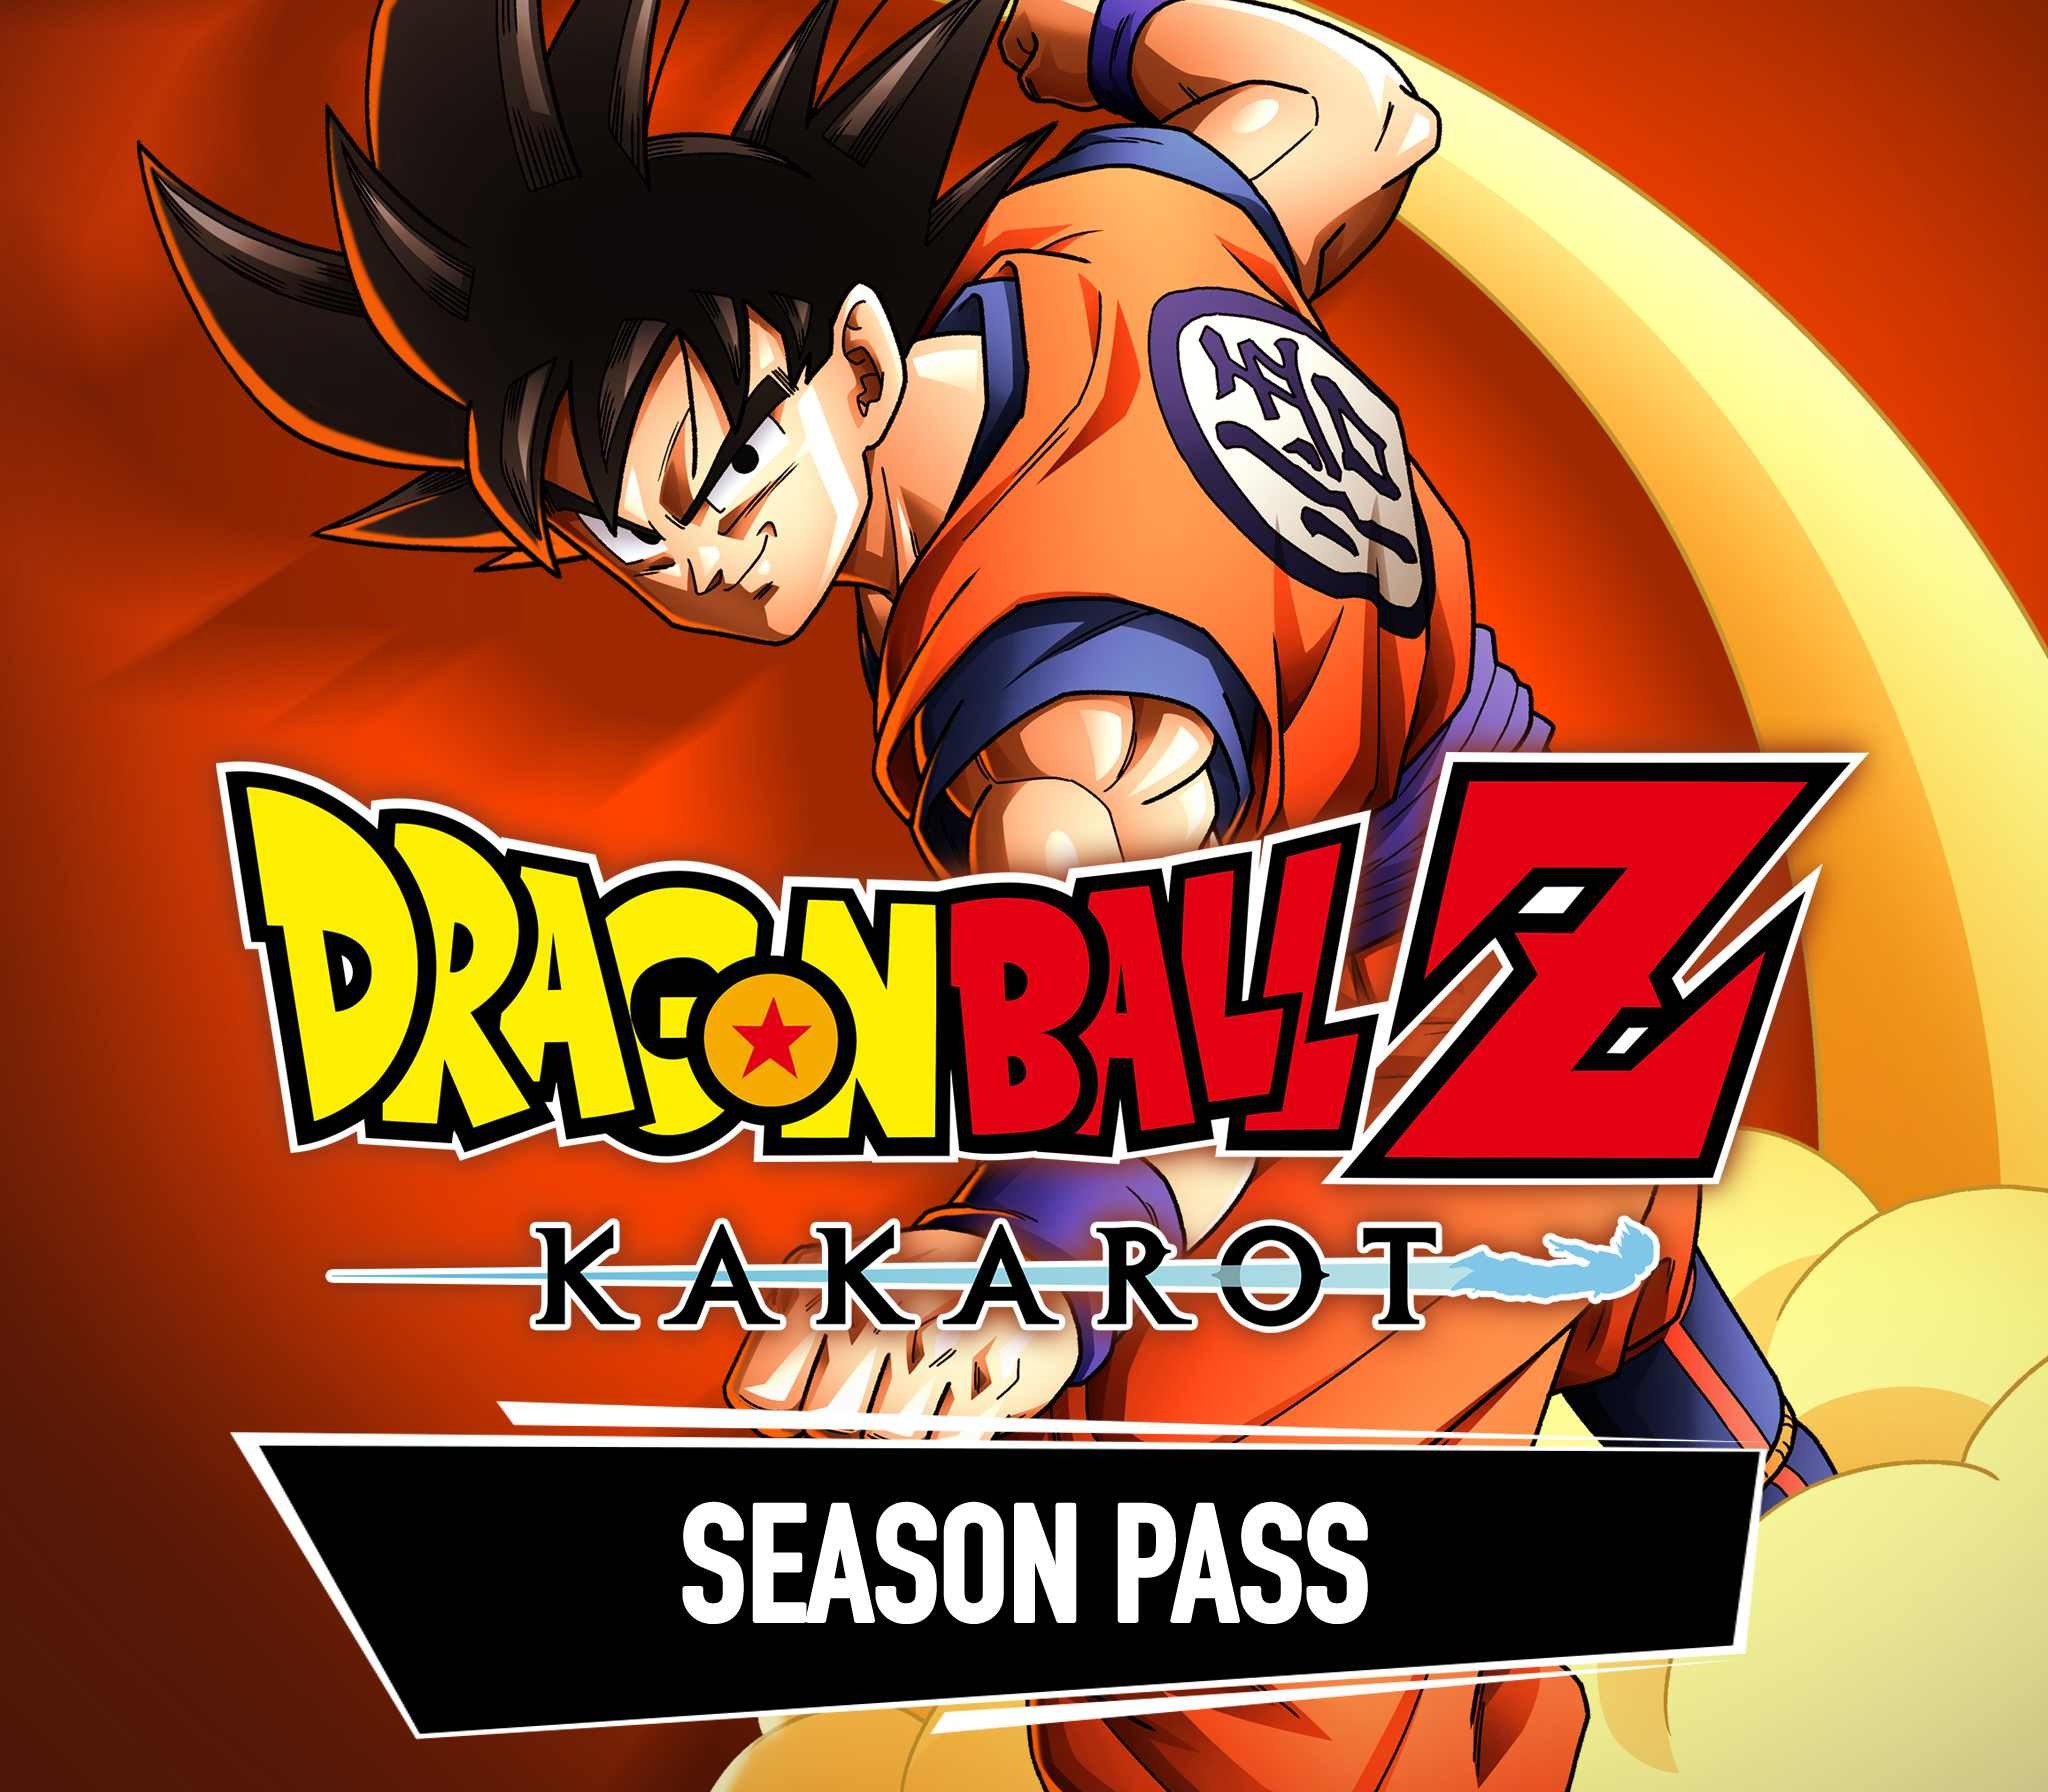 DRAGON BALL Z: KAKAROT Season Pass 2 on Steam